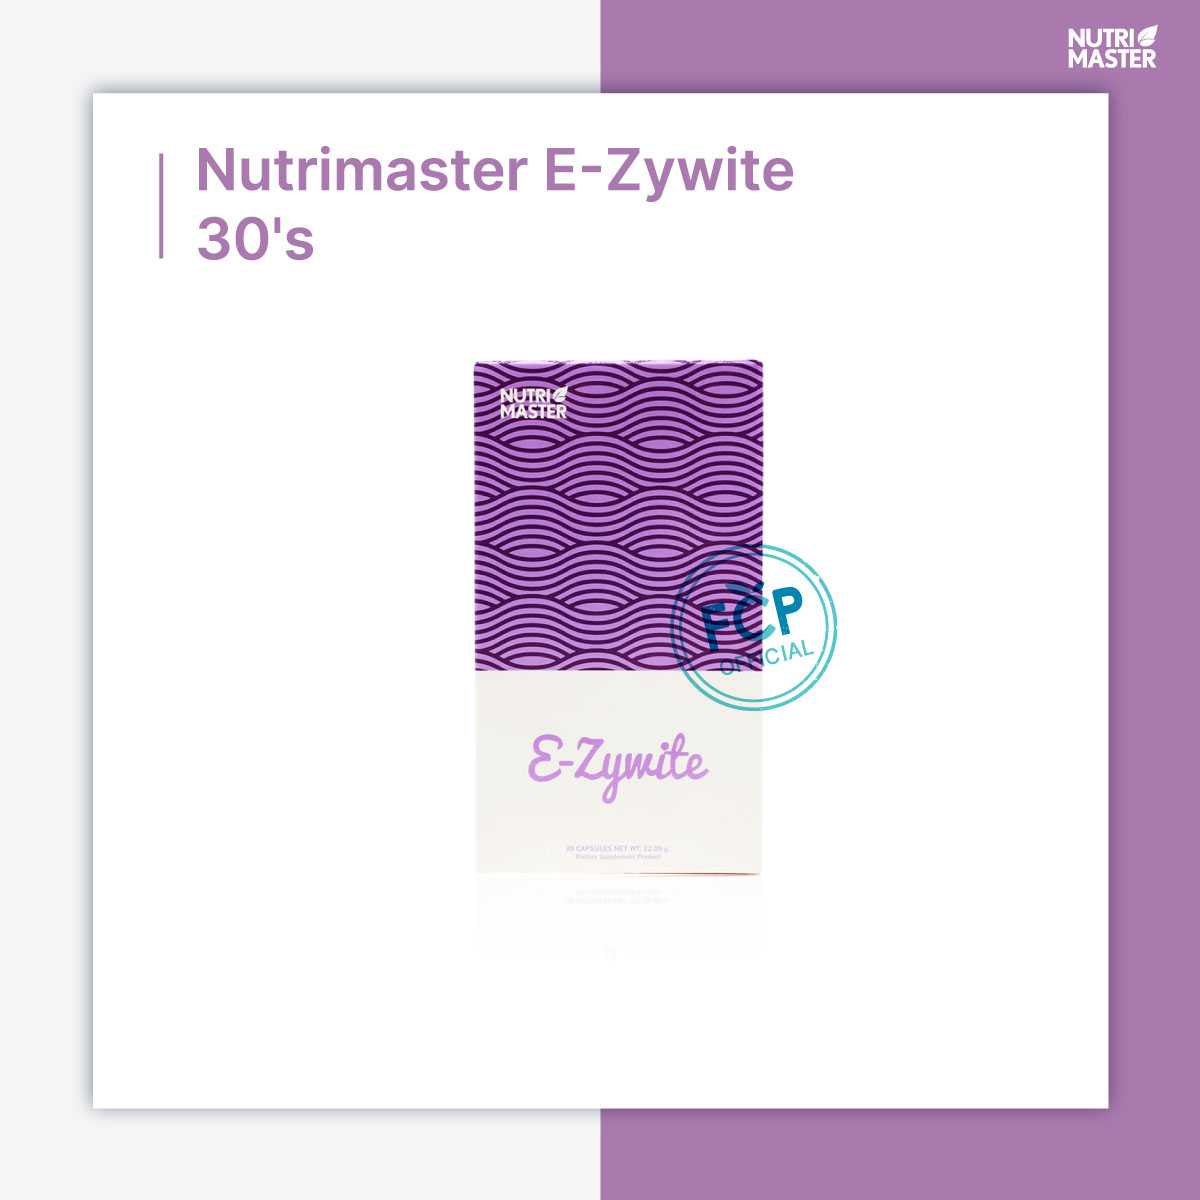 Promotion Nutrimaster Ezywite